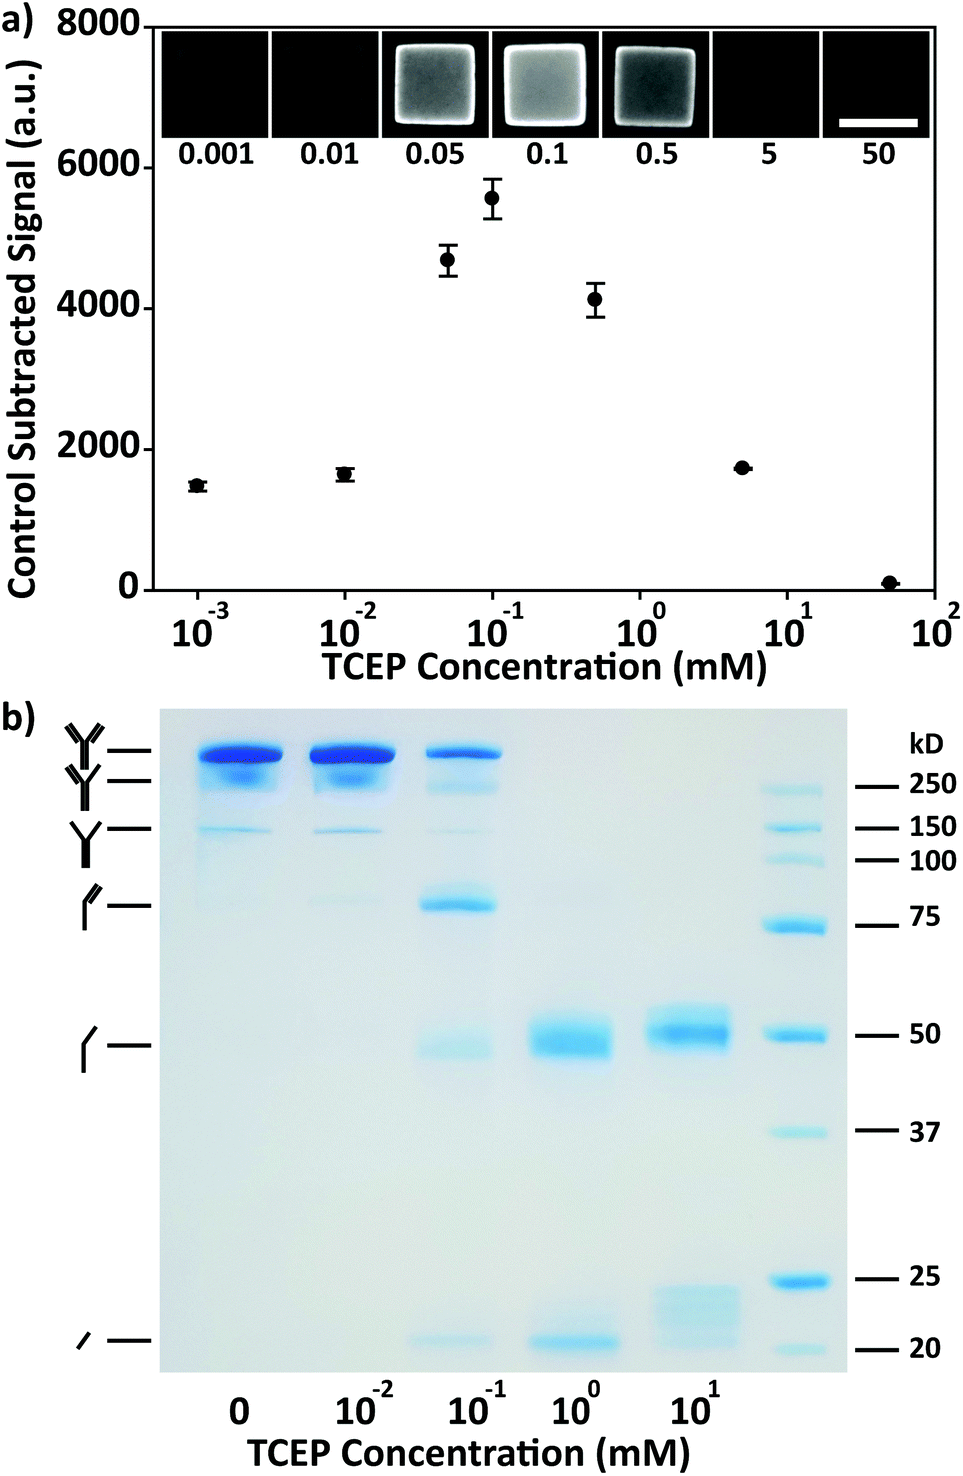 Linker Free Antibody Conjugation For Sensitive Hydrogel Microparticle Based Multiplex Immunoassay Analyst Rsc Publishing Doi 10 1039 C9ane